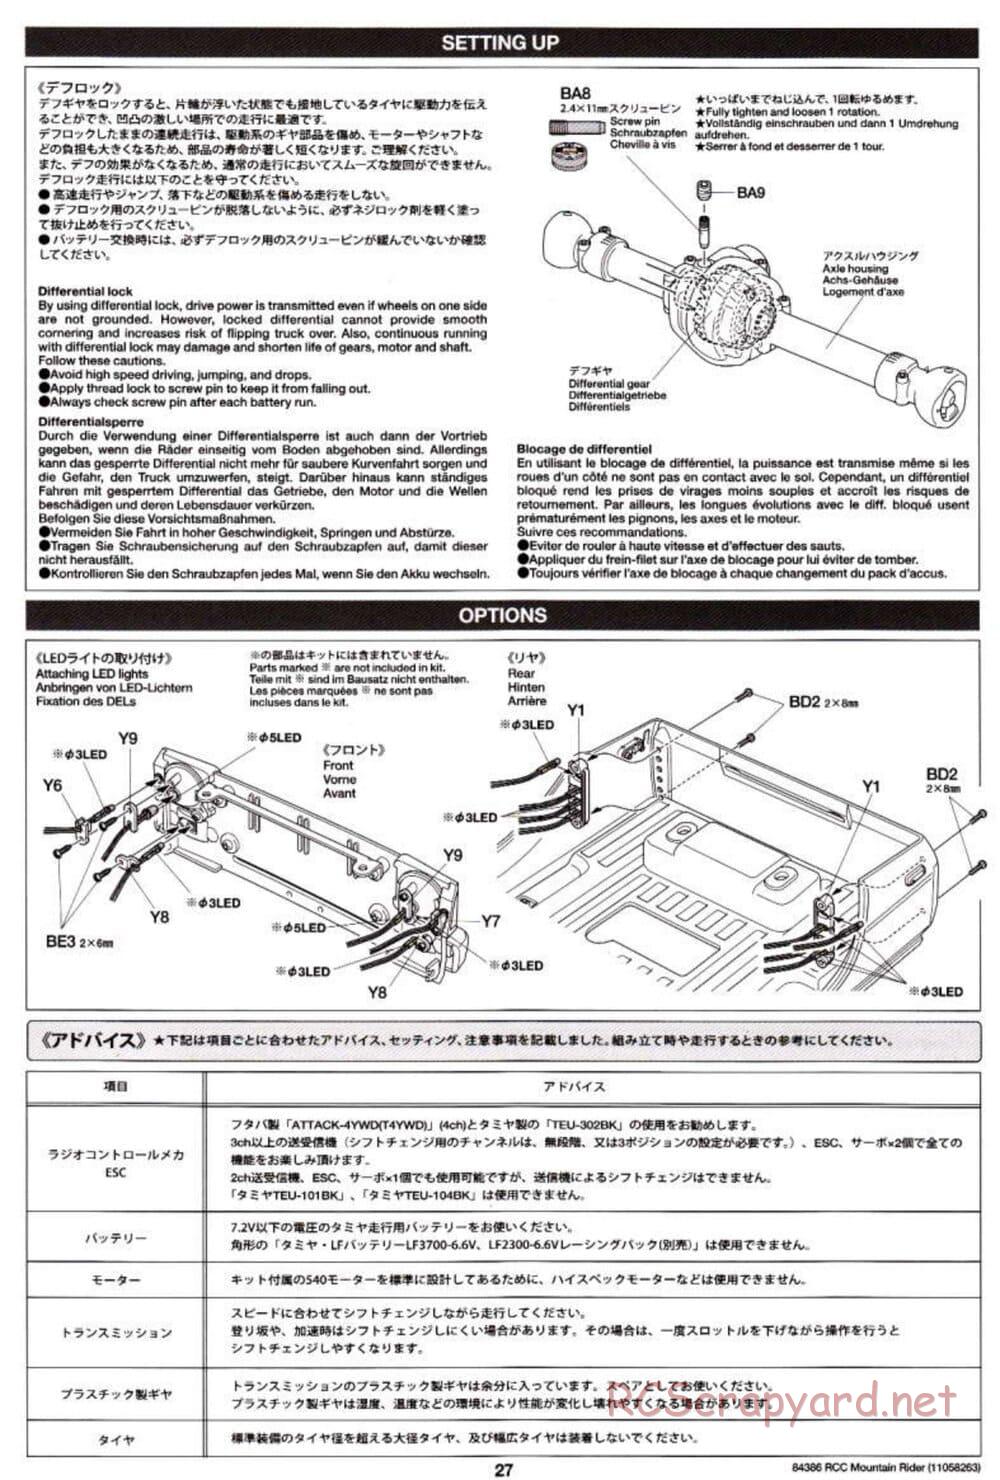 Tamiya - Toyota 4x4 Pick-Up Mountain Rider Chassis - Manual - Page 27